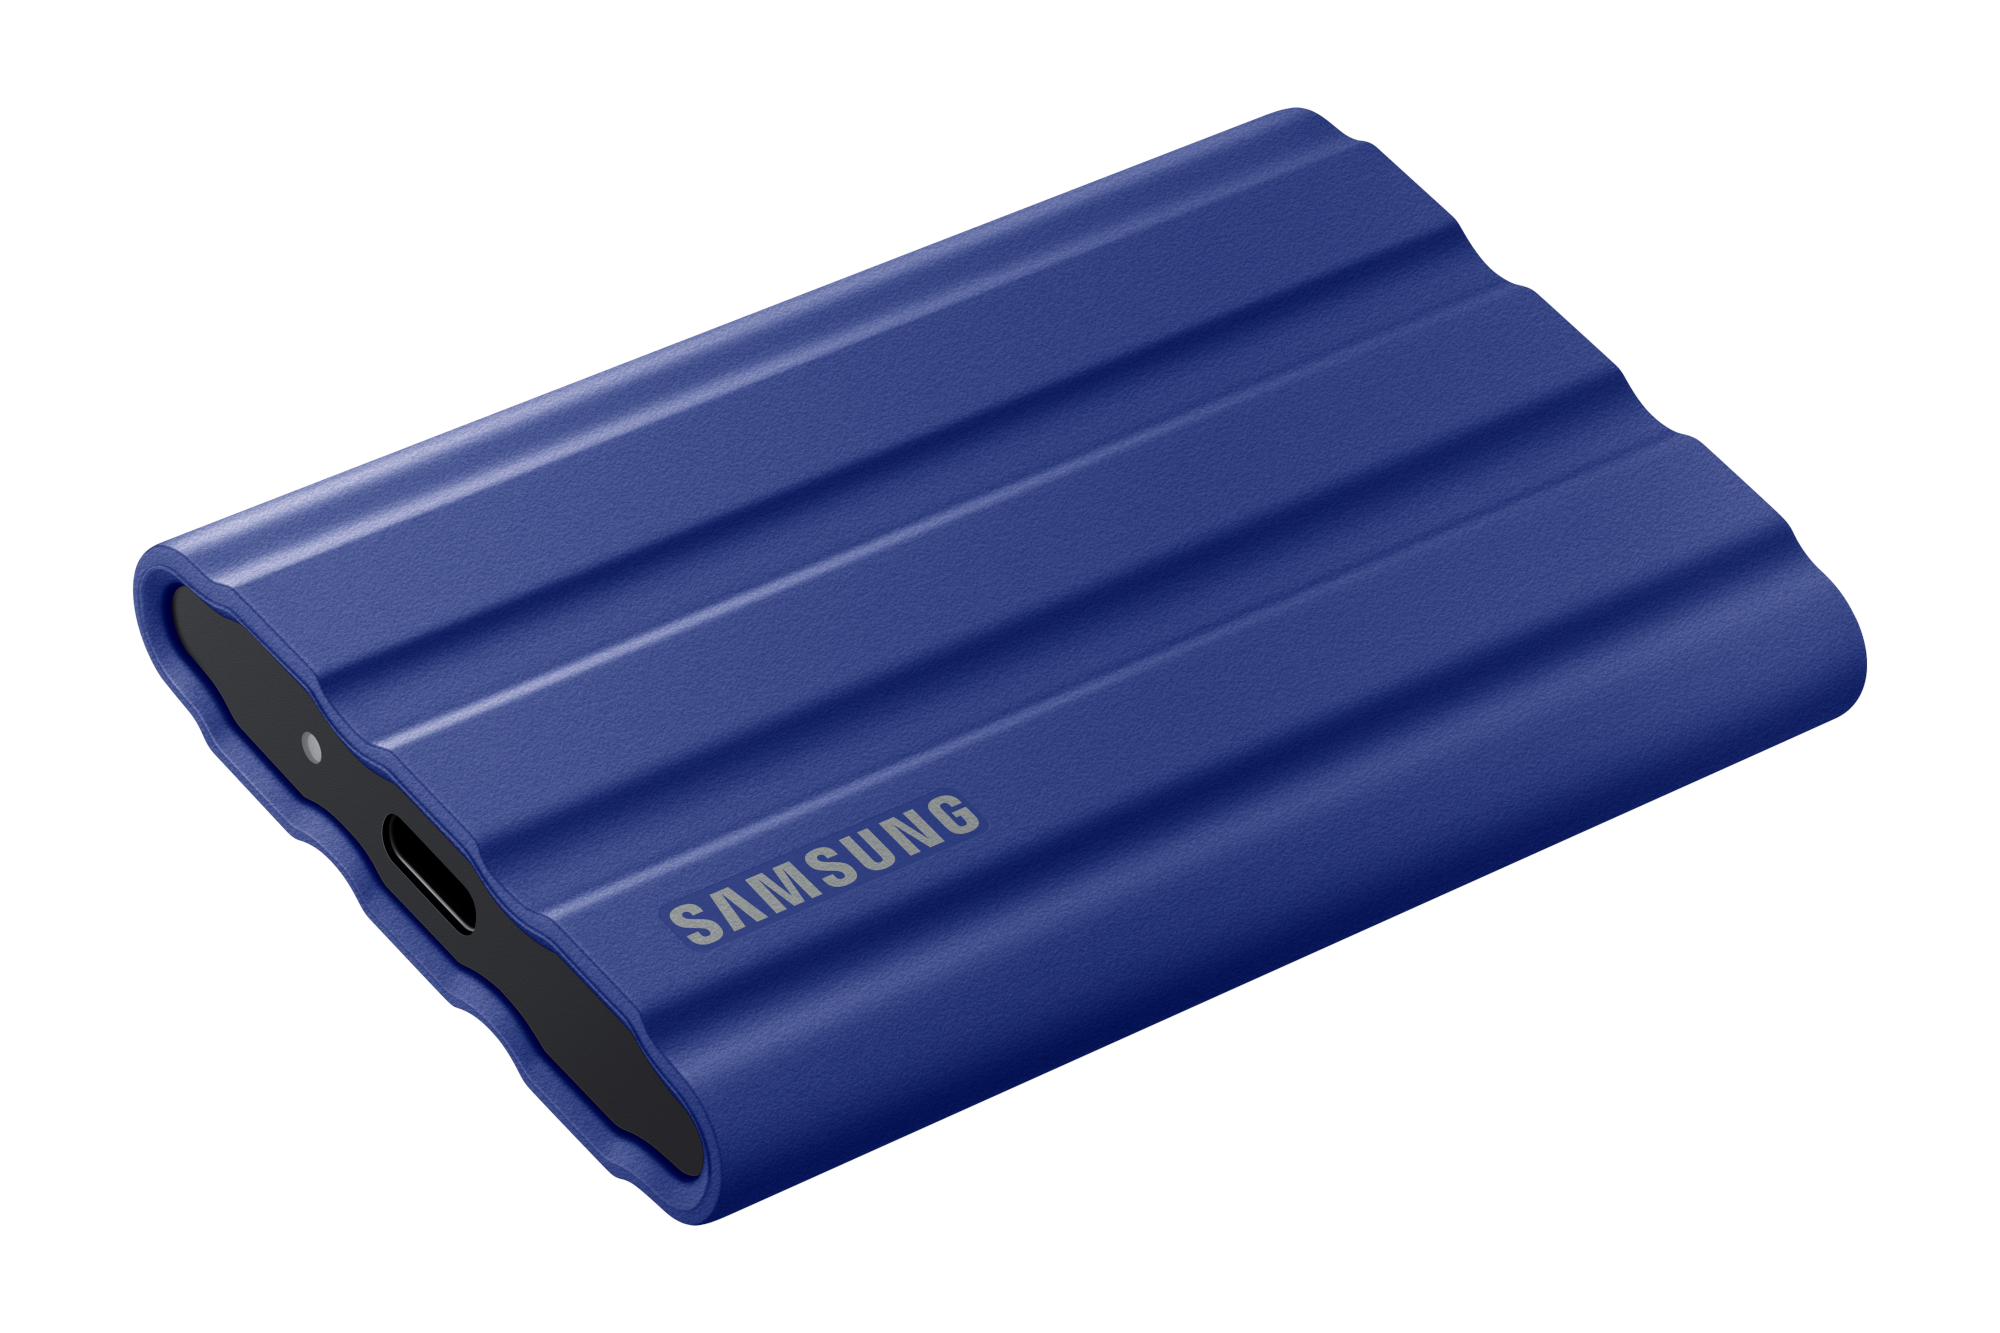 Samsung T7 Shield - أفضل محرك USB أداء